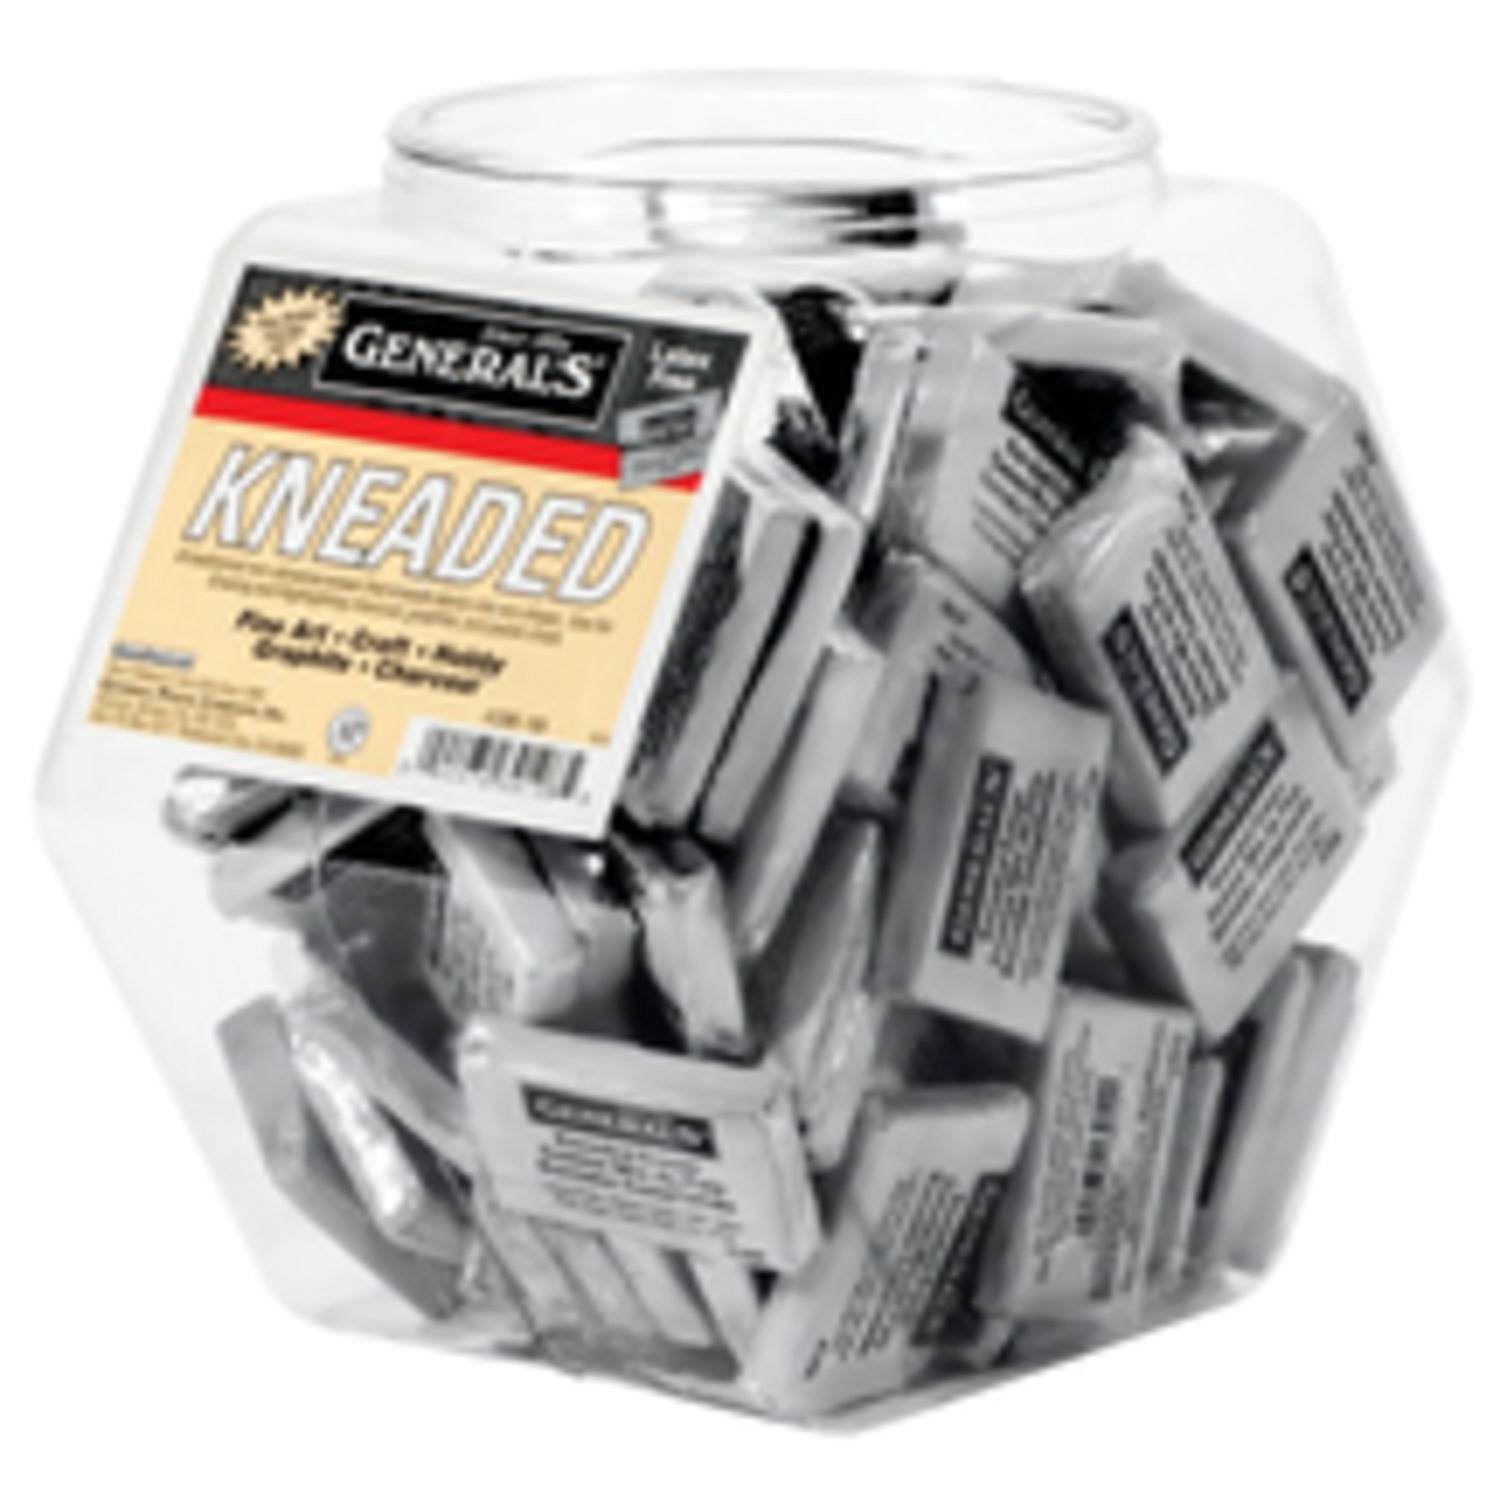 General's Kneaded Eraser – Case for Making